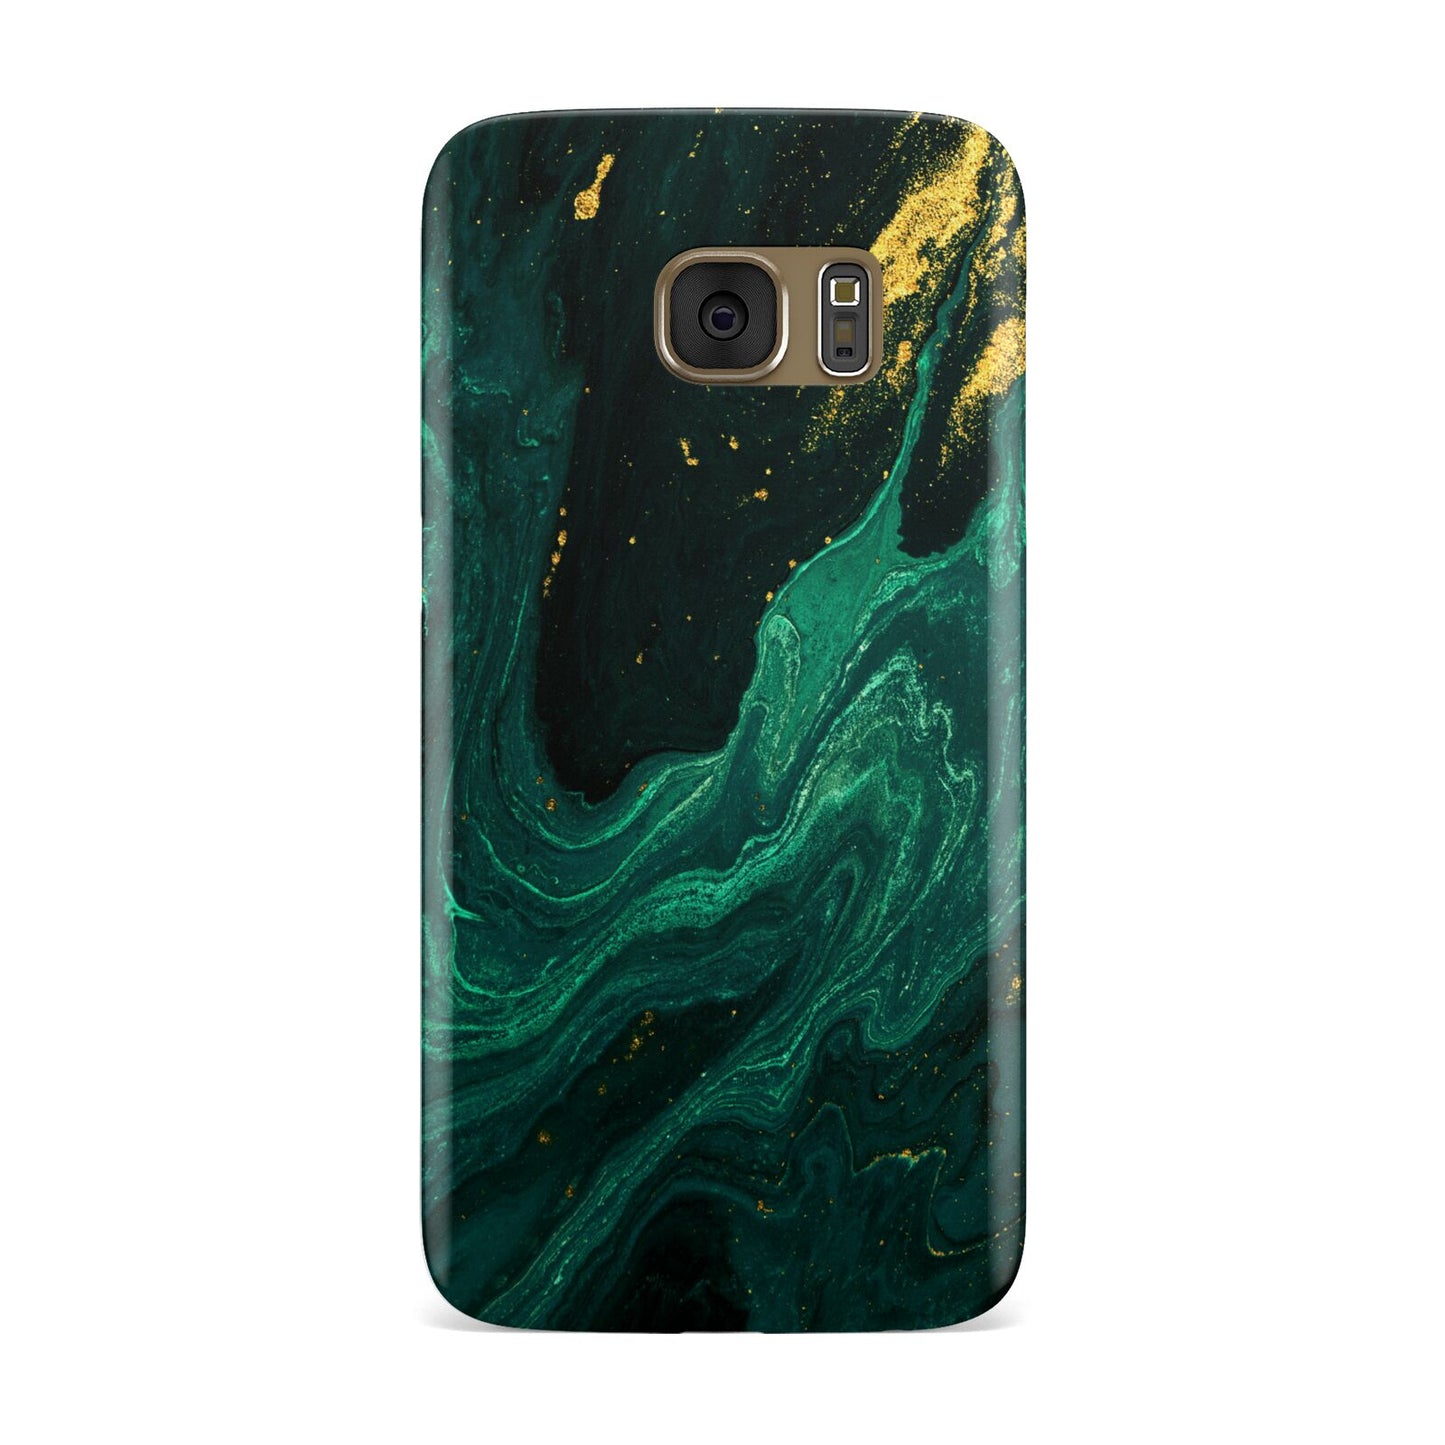 Emerald Green Samsung Galaxy Case